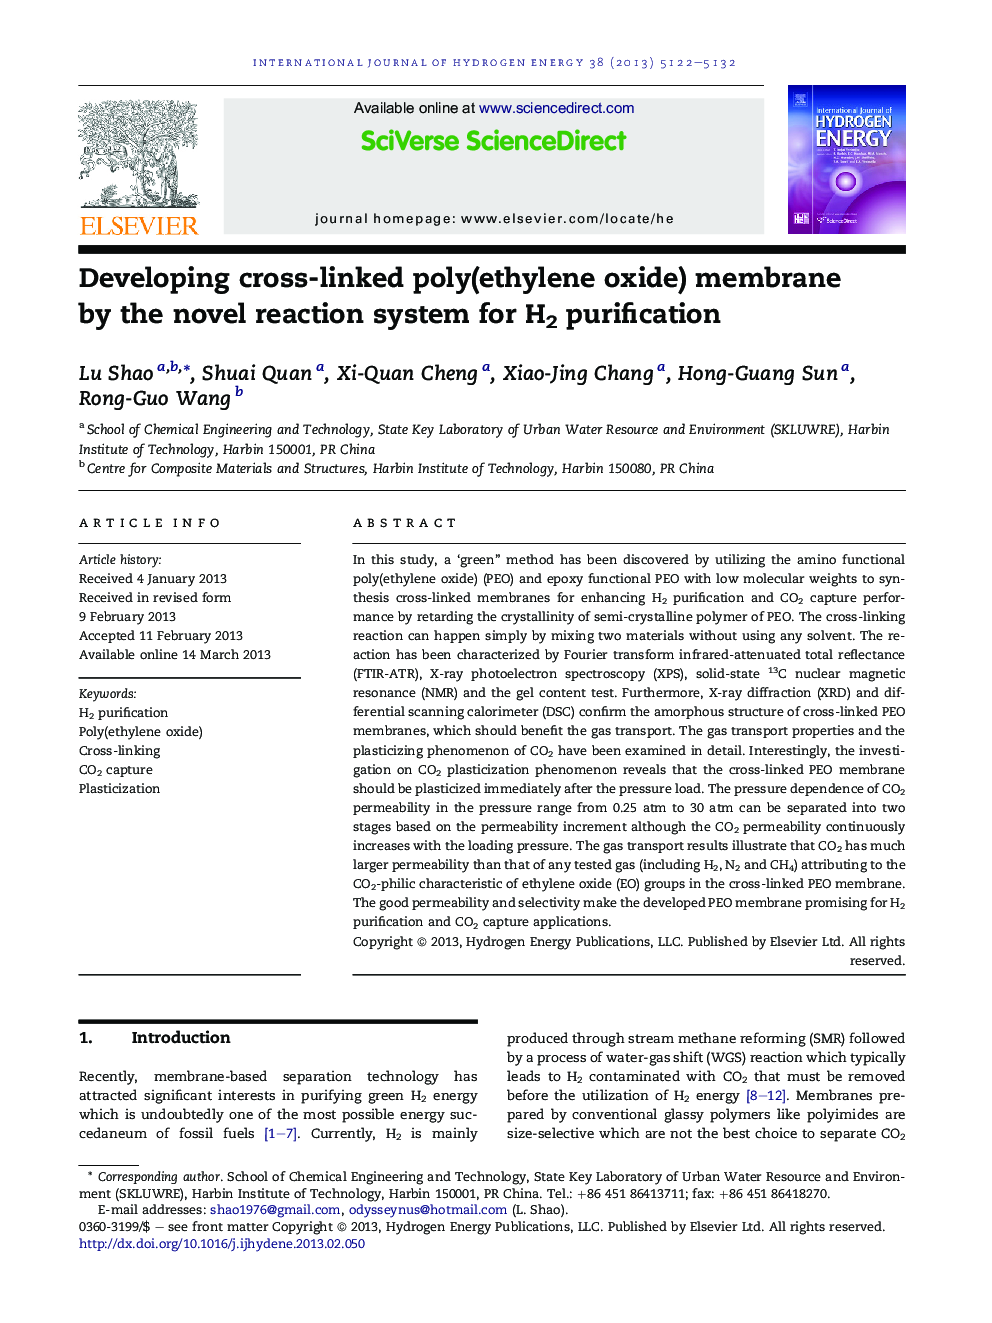 Developing cross-linked poly(ethylene oxide) membrane byÂ the novel reaction system for H2 purification